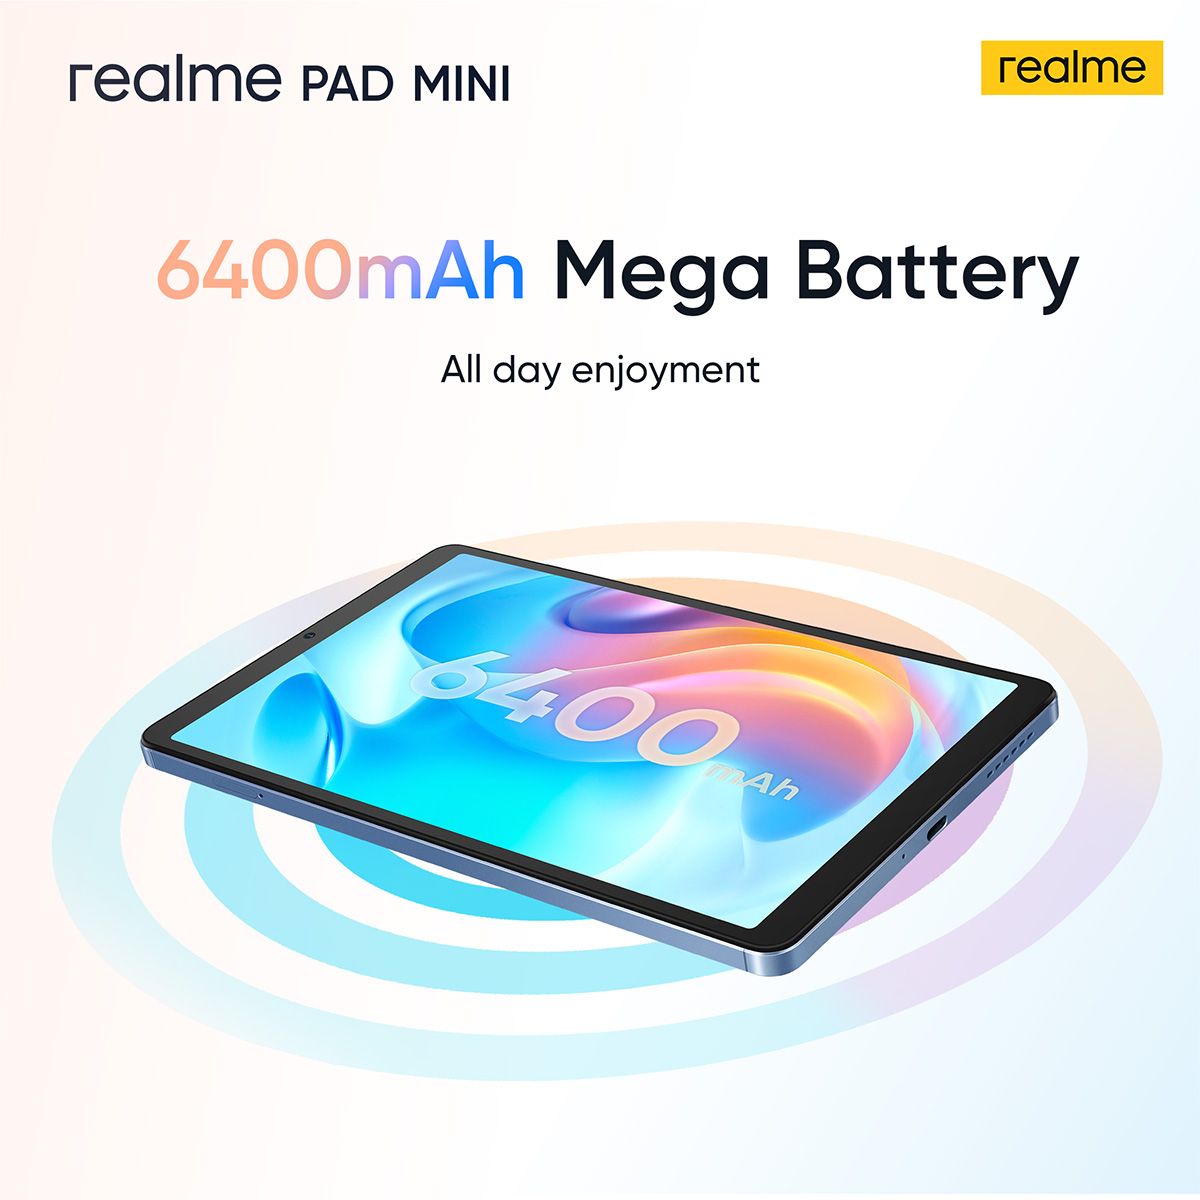 realme pad mini Malaysia launch